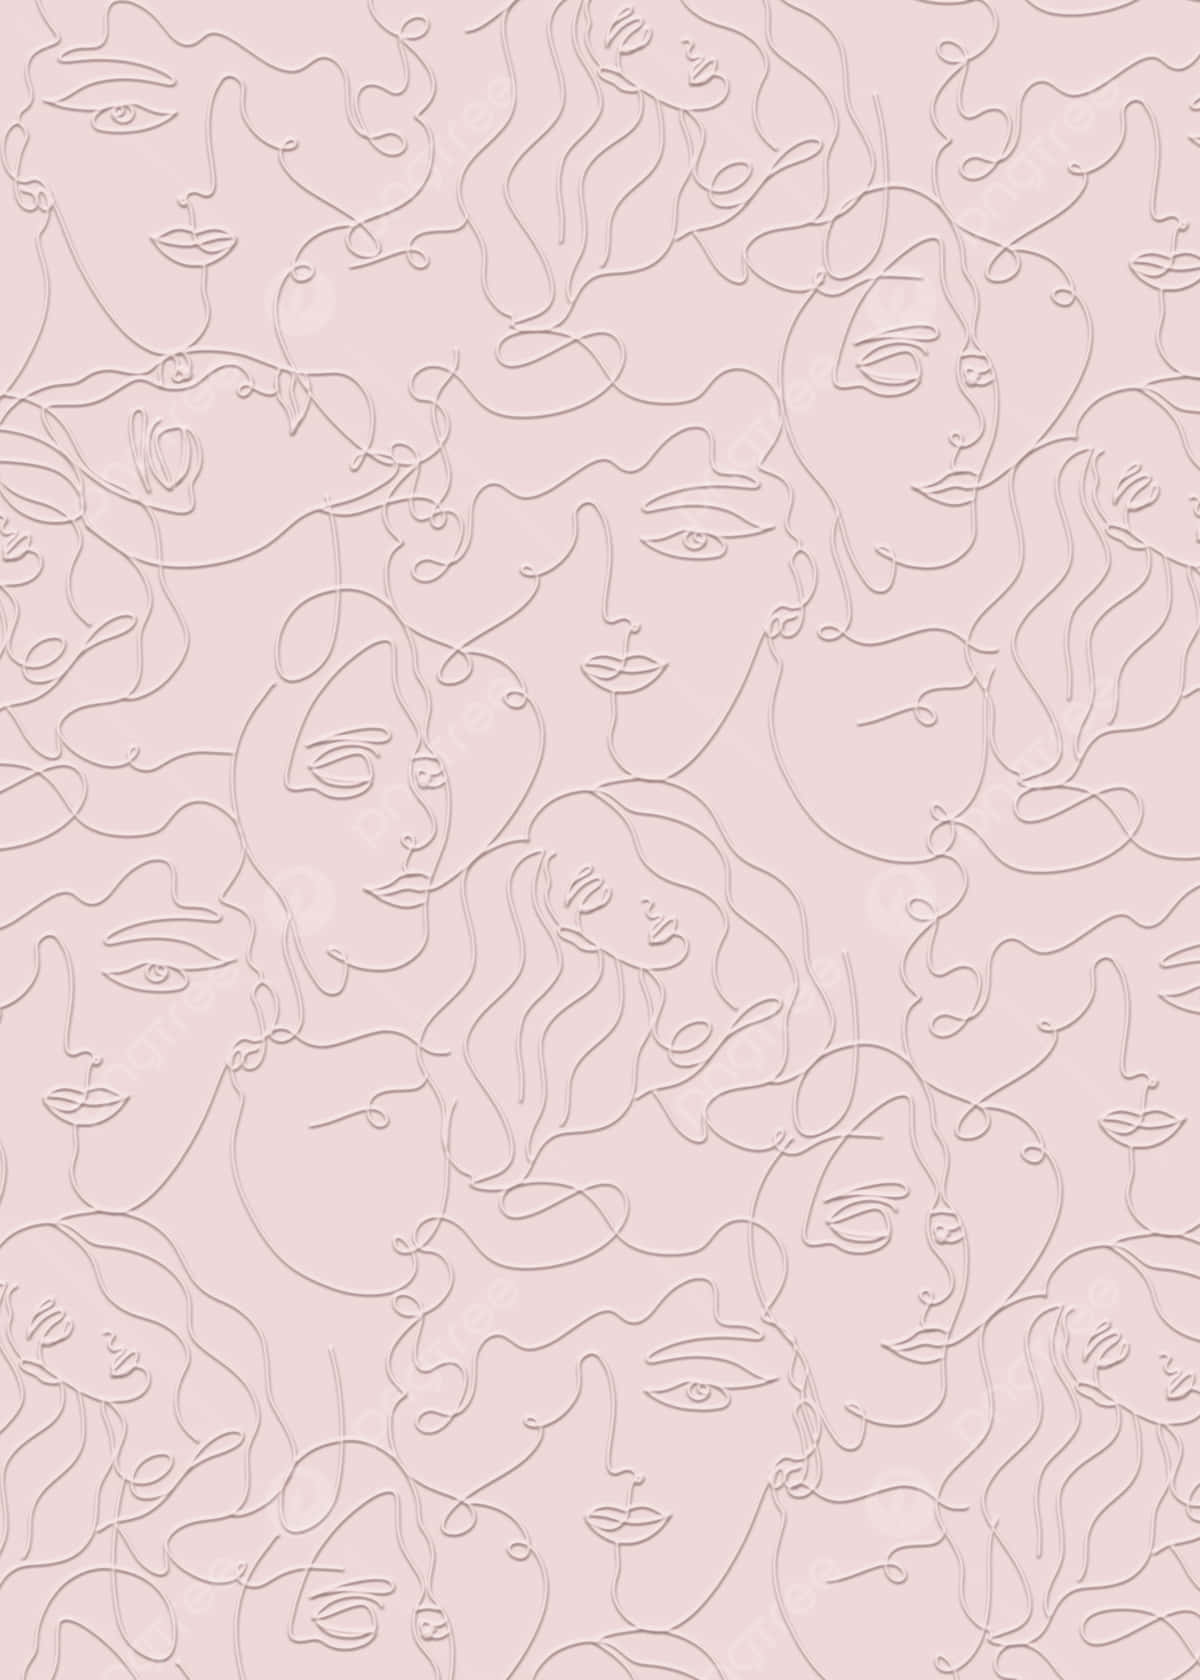 Abstract Line Art Faces Pattern.jpg Wallpaper